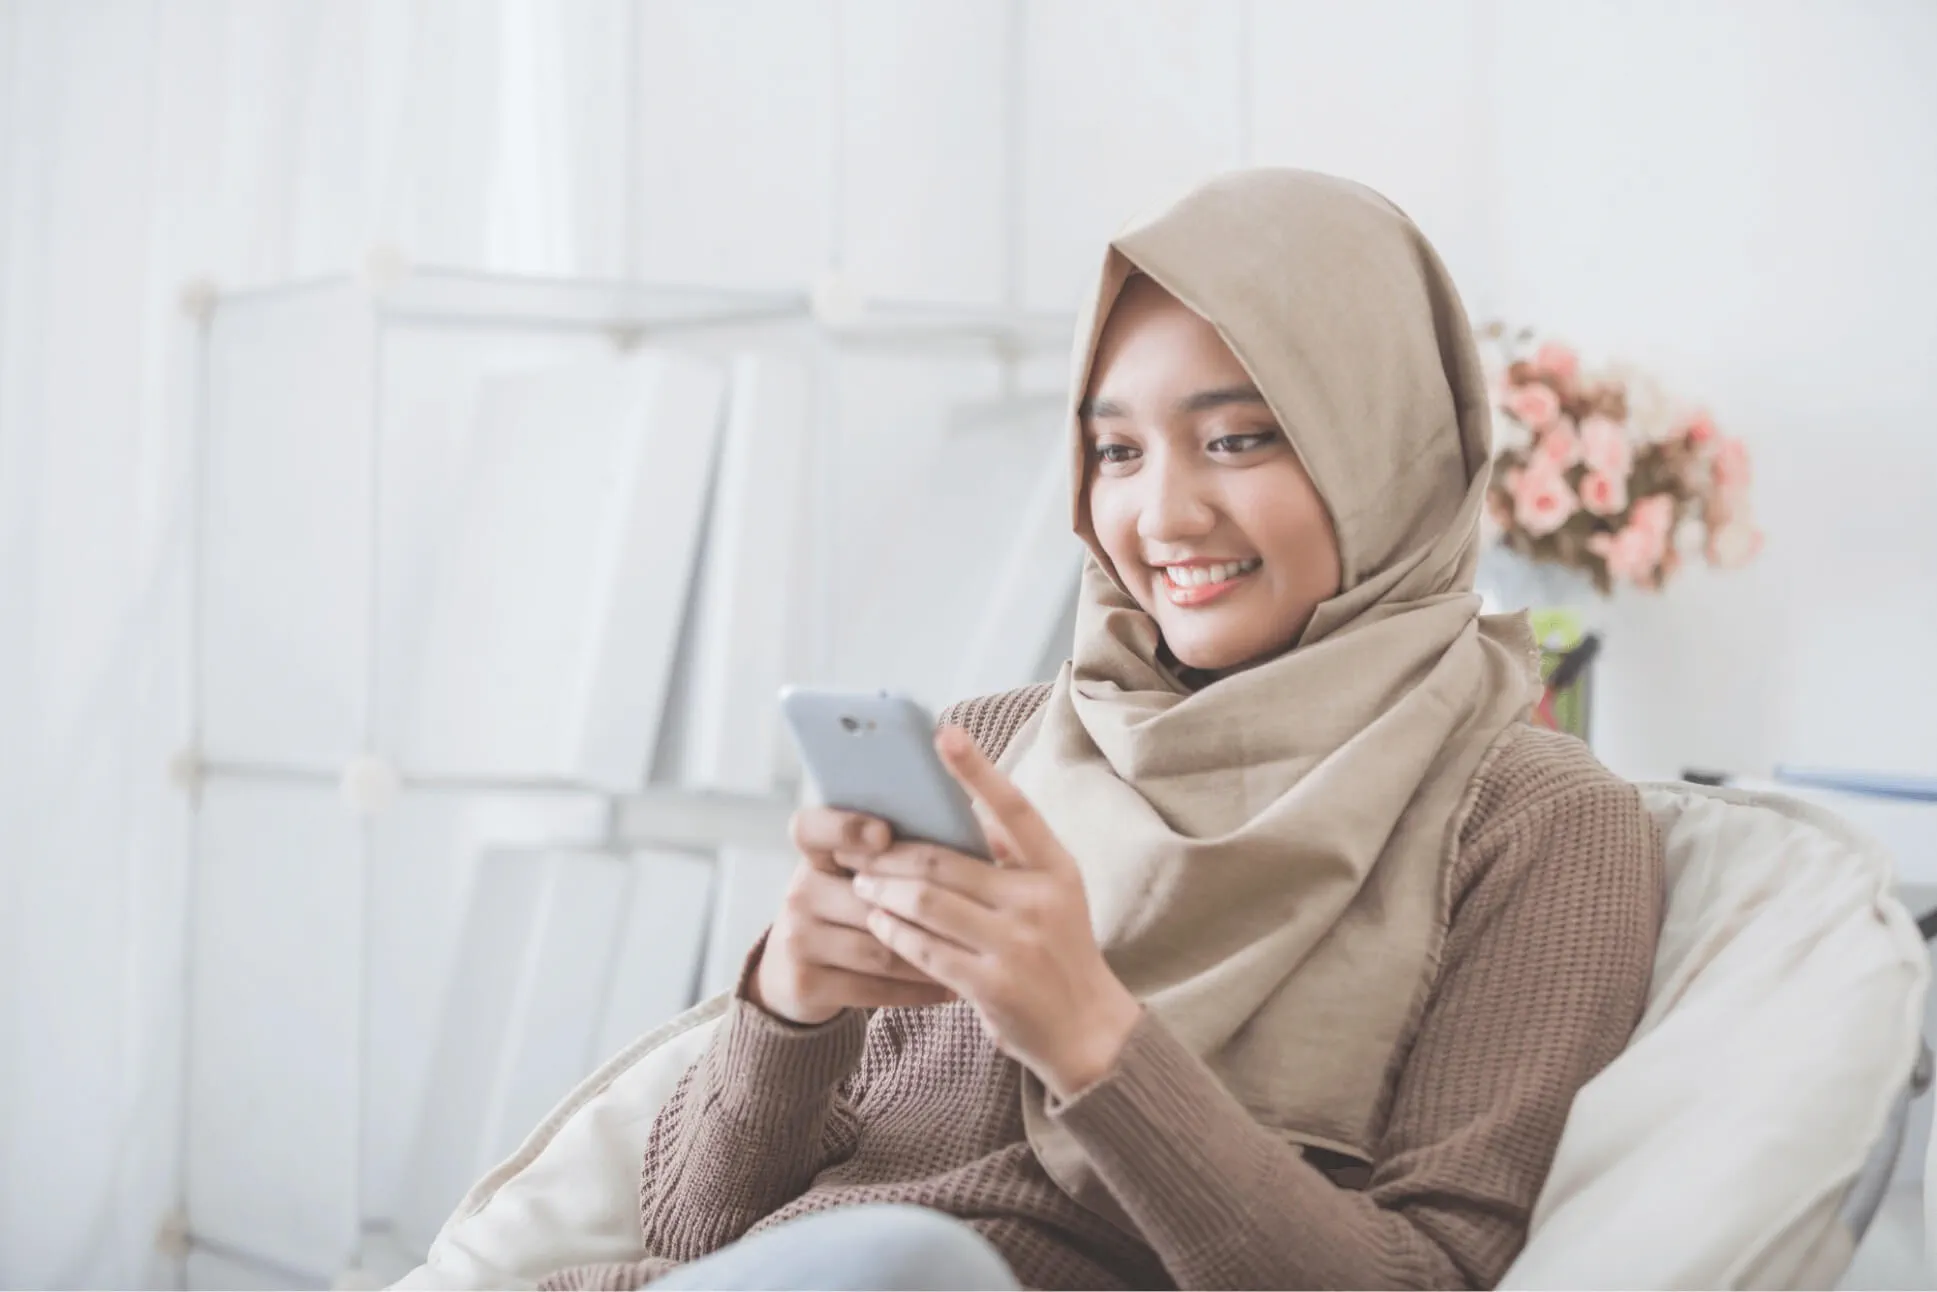 Islamic Lady using her phone